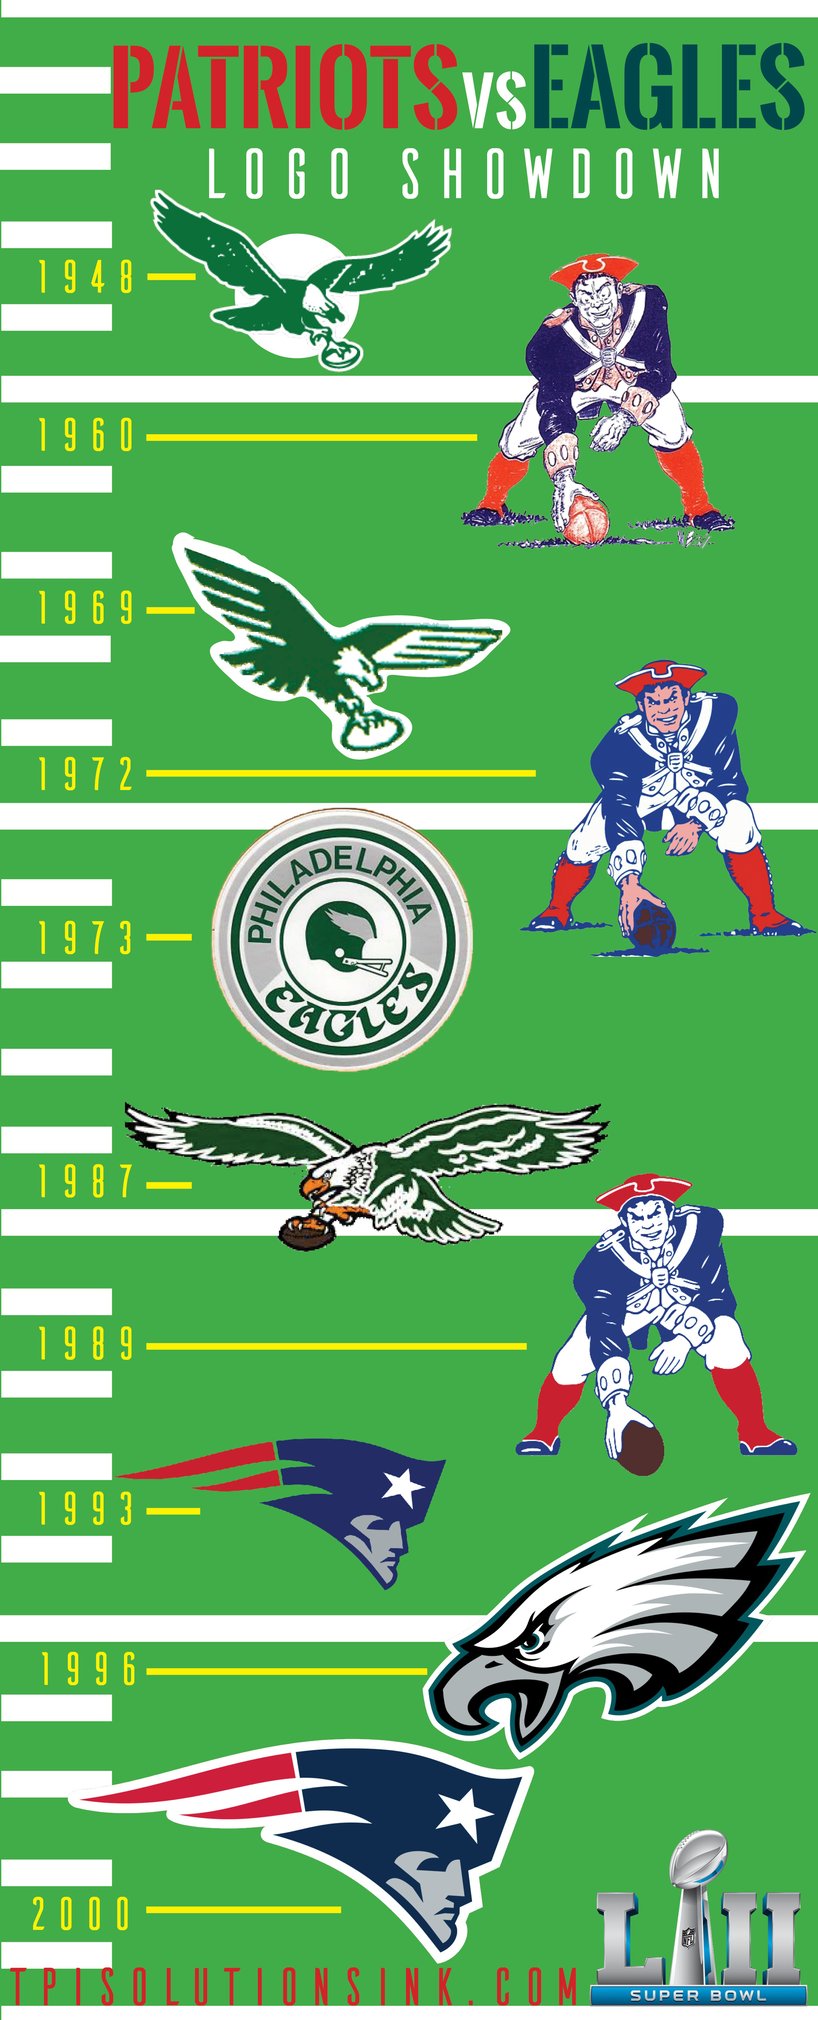 Super Bowl LII Logo Showdown: Patriots vs. Eagles 2018